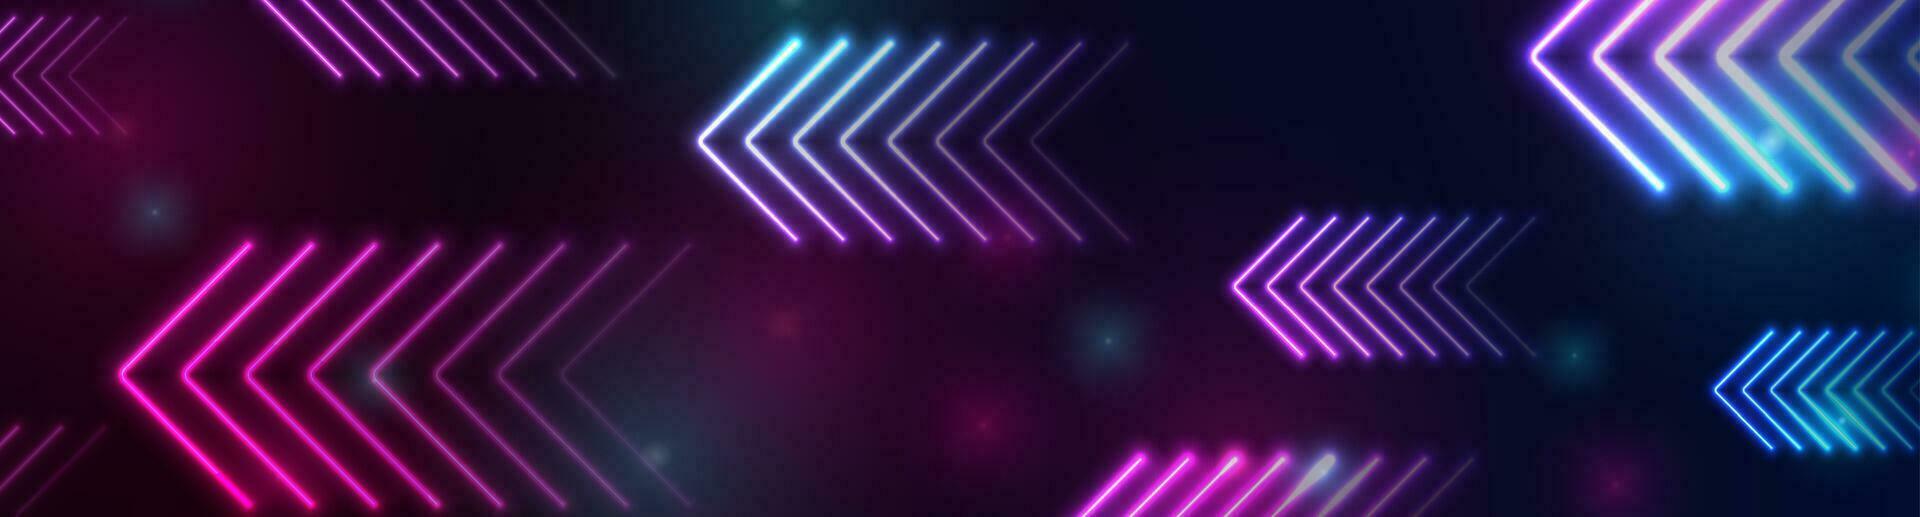 hell Blau lila abstrakt Neon- Pfeile Technik Sci-Fi Hintergrund vektor